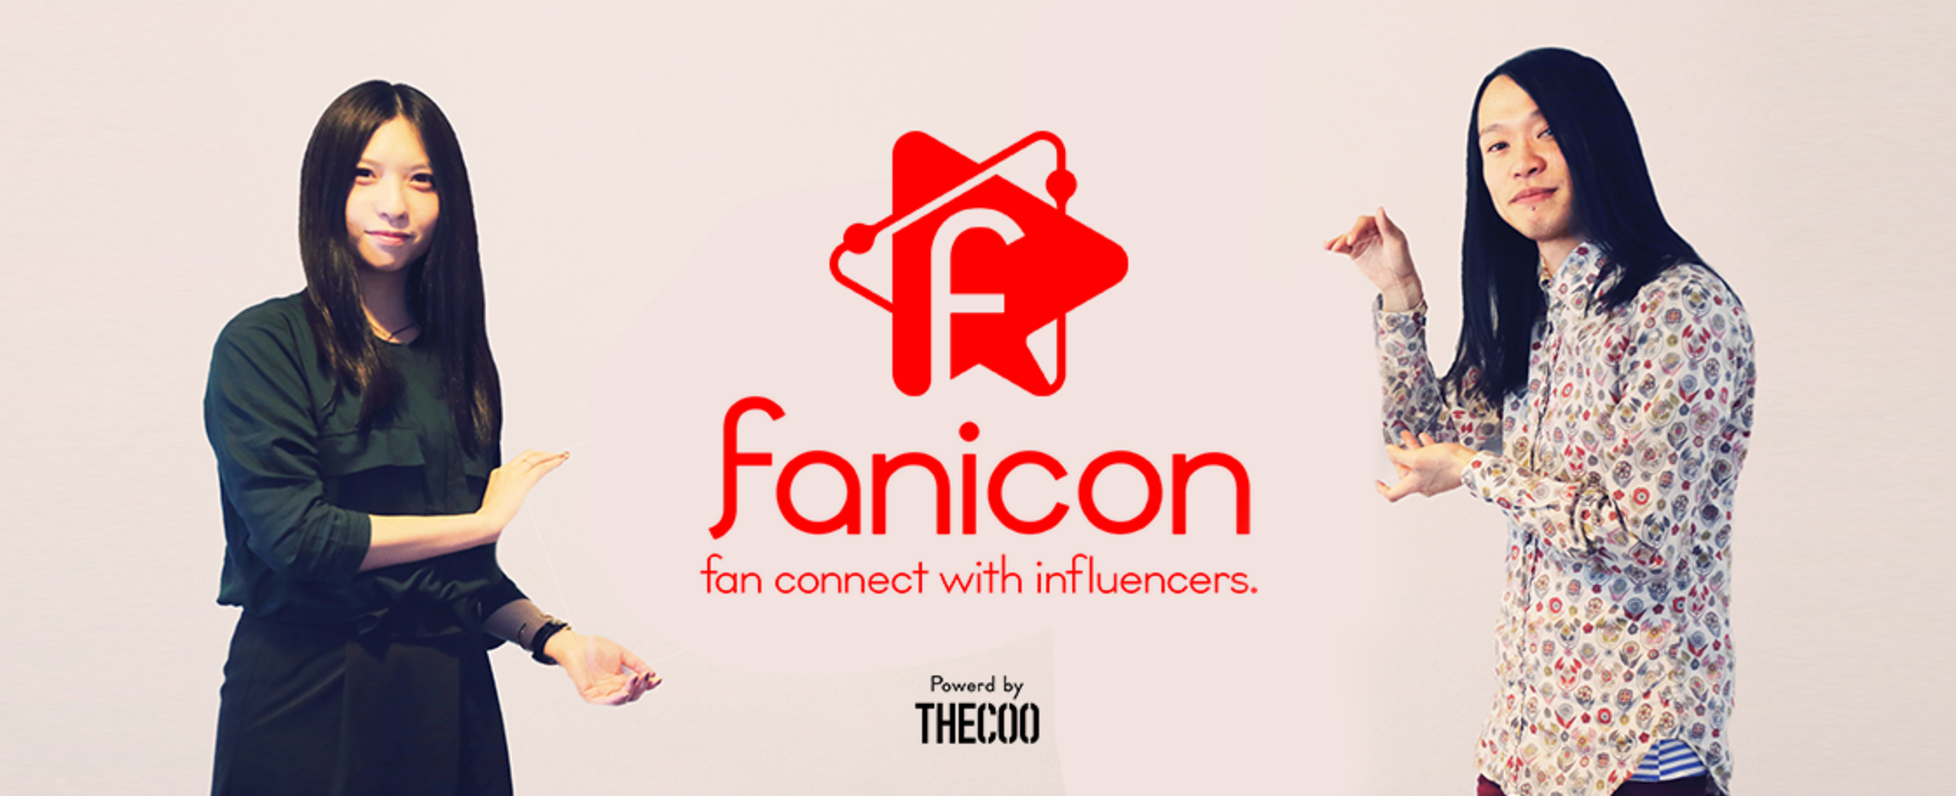 「fanicon」の画像検索結果